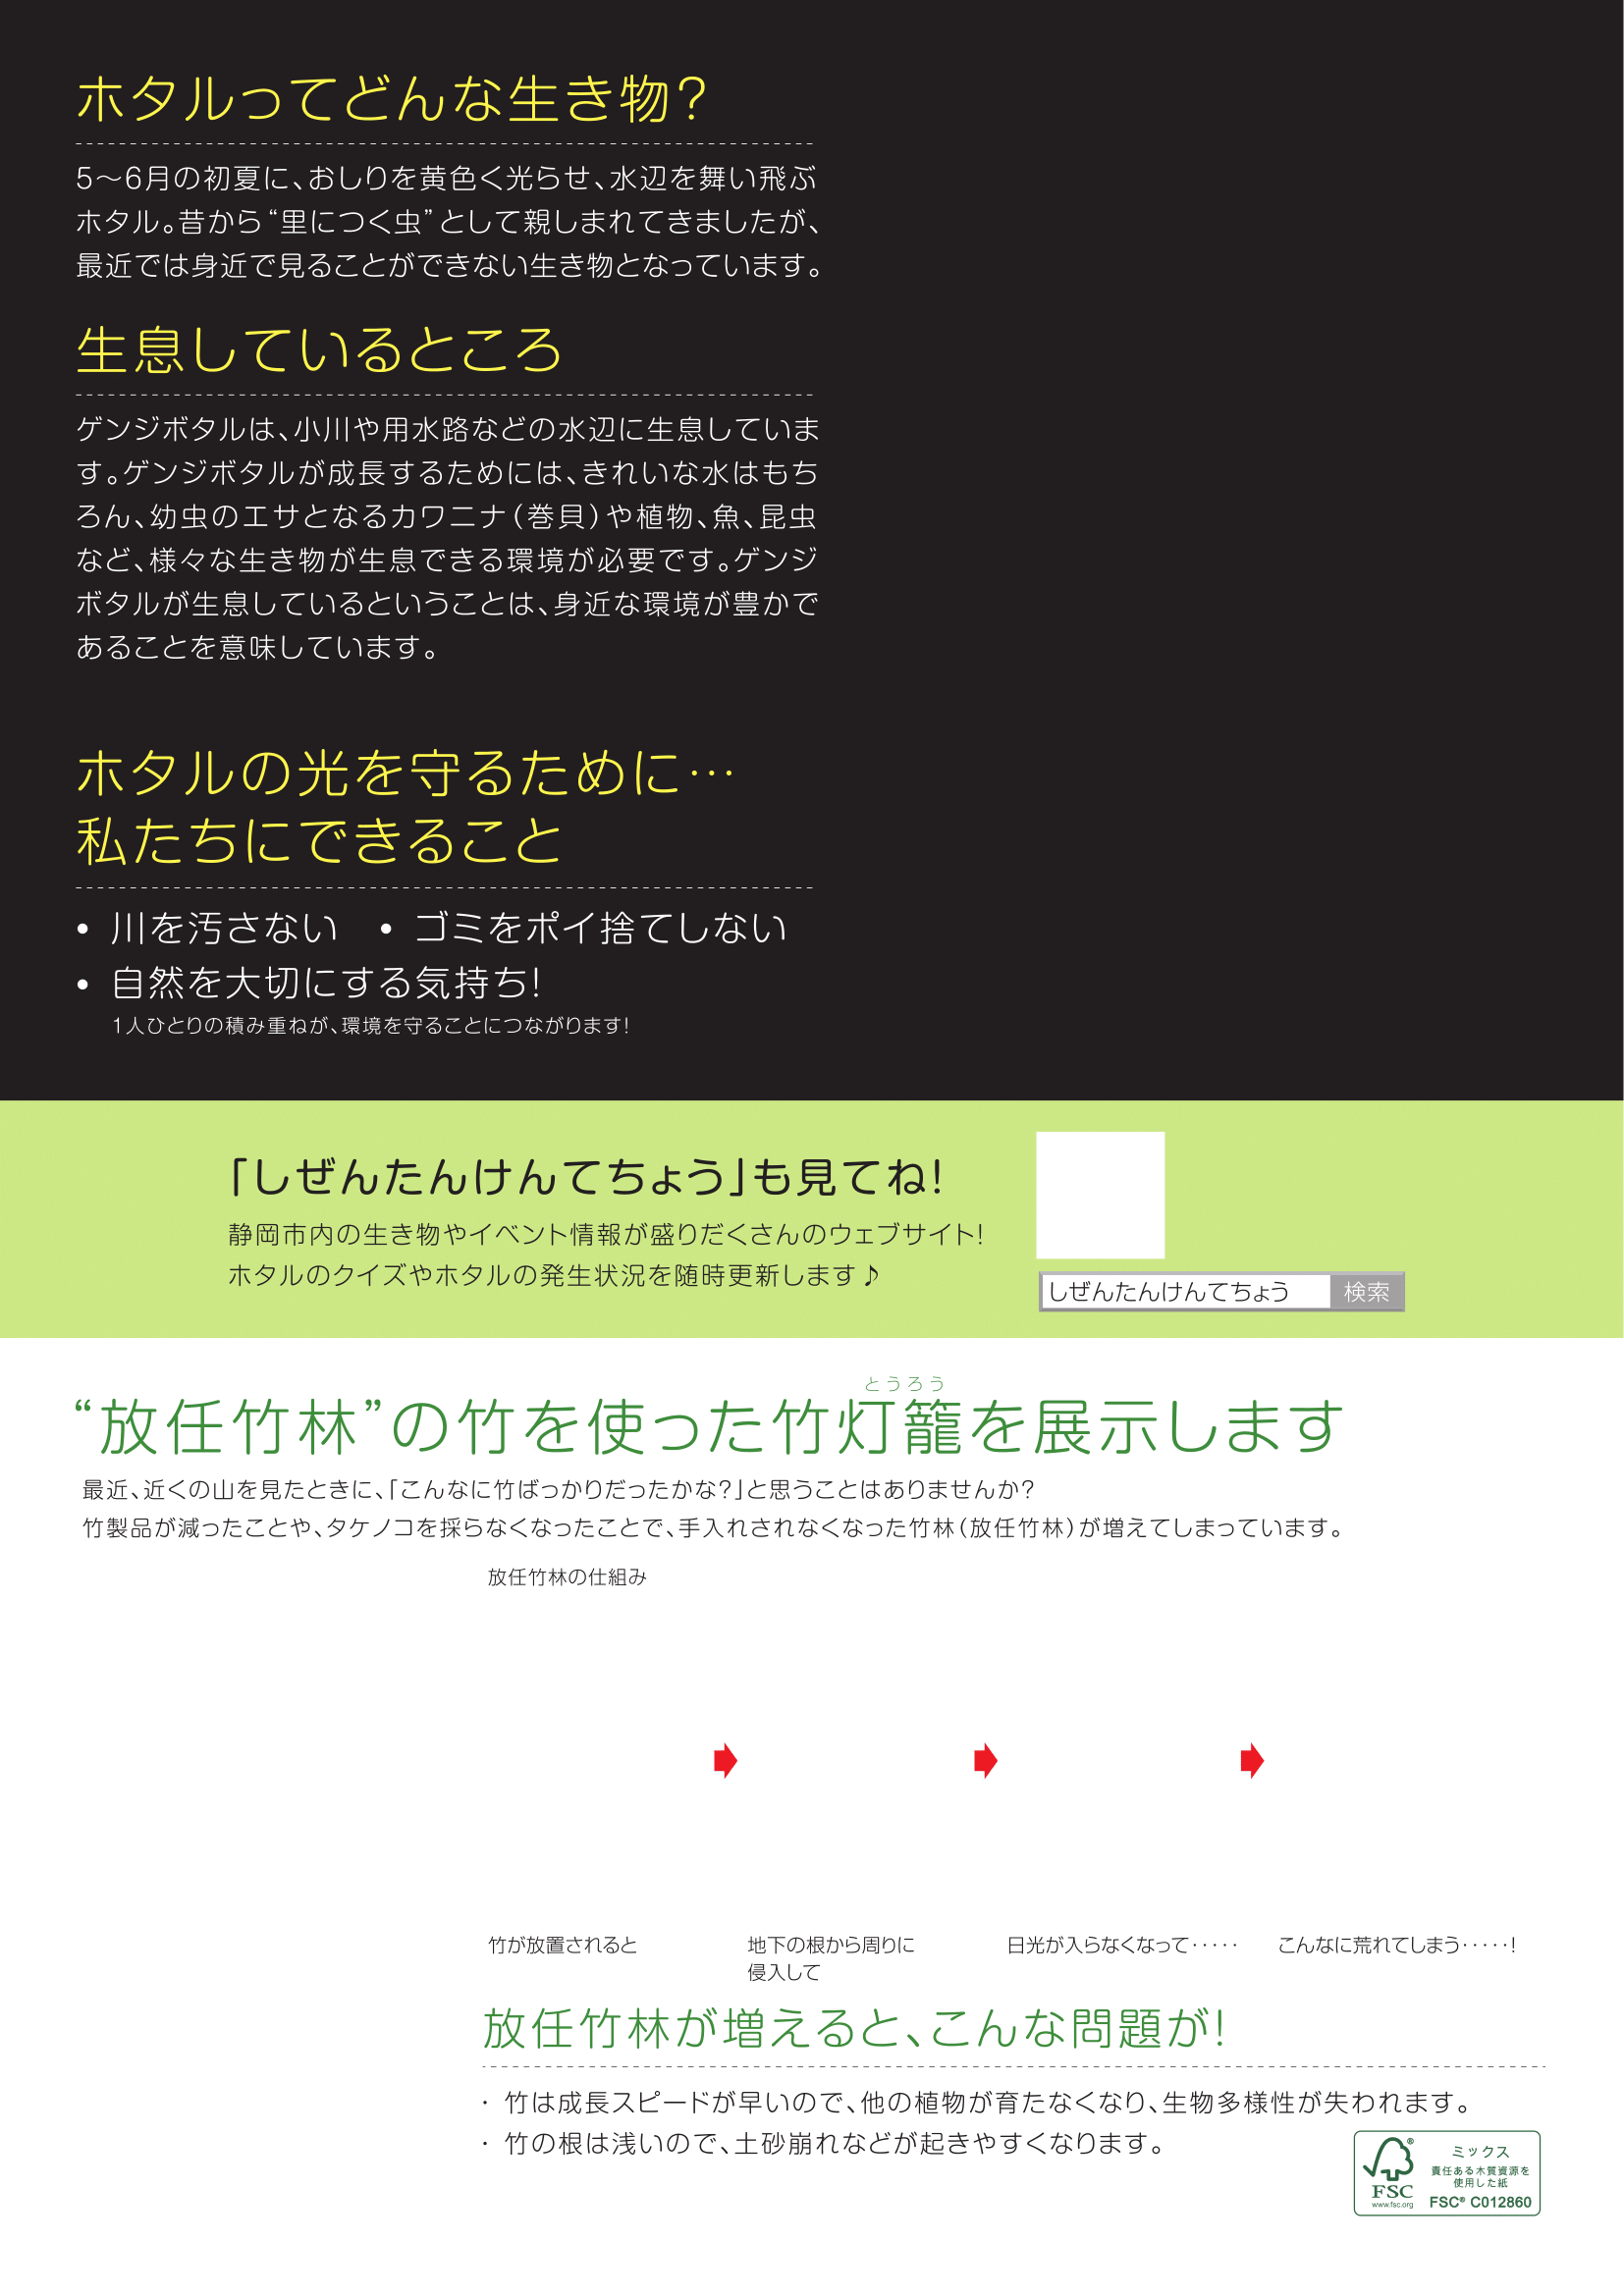 https://www.shizutan.jp/learning/2019/04/22/images/%E3%83%81%E3%83%A9%E3%82%B7%E8%A3%8F.png